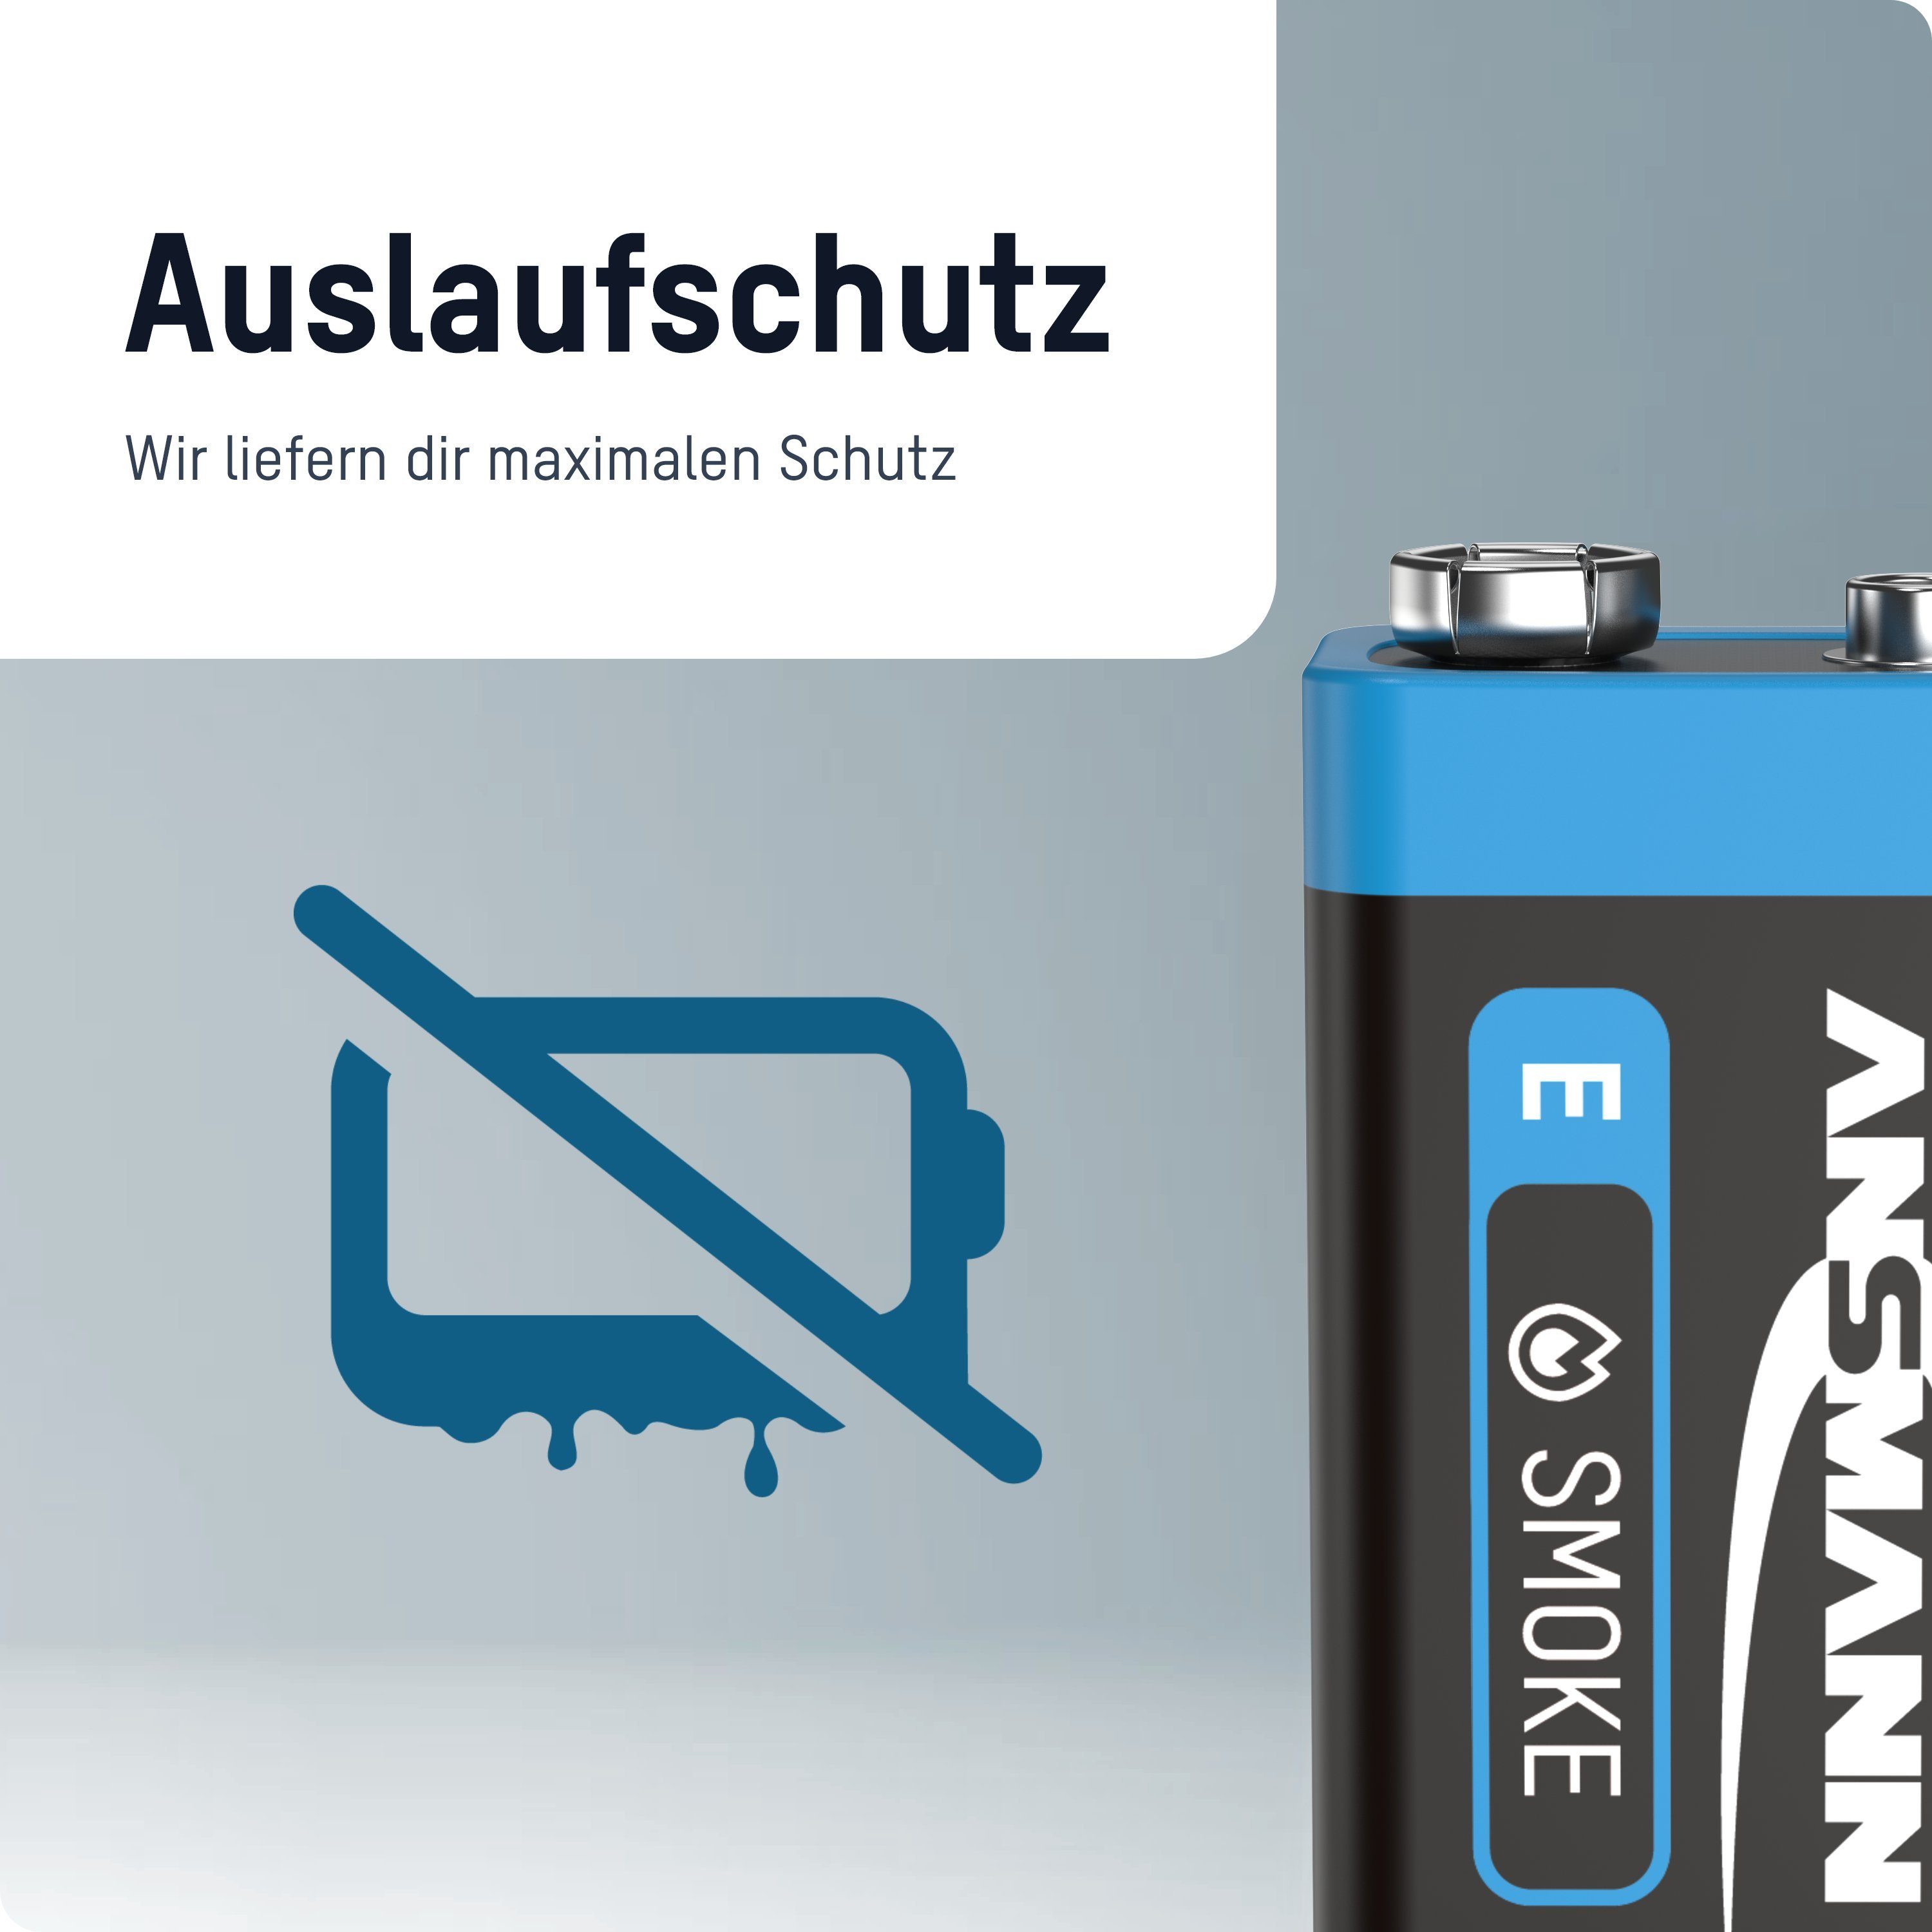 ANSMANN® 5 Lithium Batterie Block Premium Batterien 9V longlife - Rauchmelder Qualität